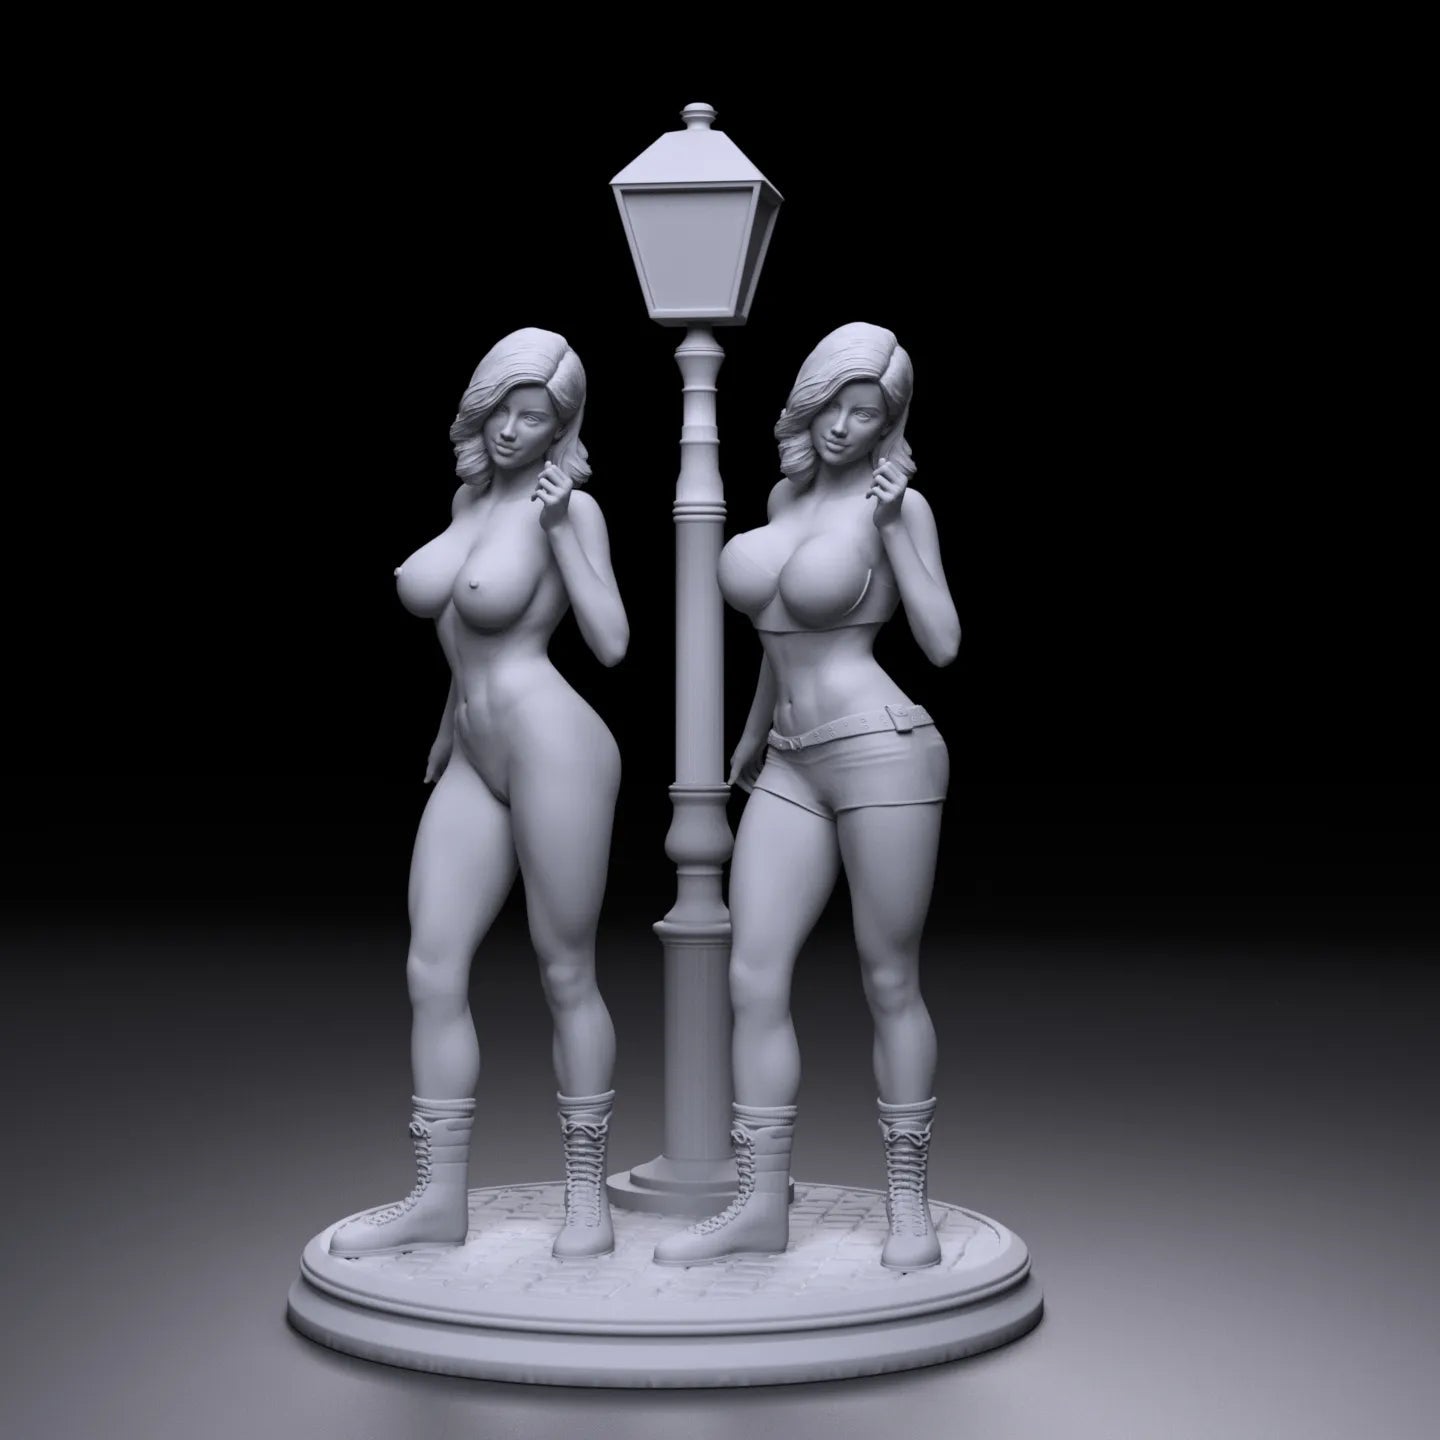 Red|Light DISTRICT 4 | 3D Printed | Fanart | Unpainted | NSFW Version | Figurine | Figure | Miniature | Sexy |